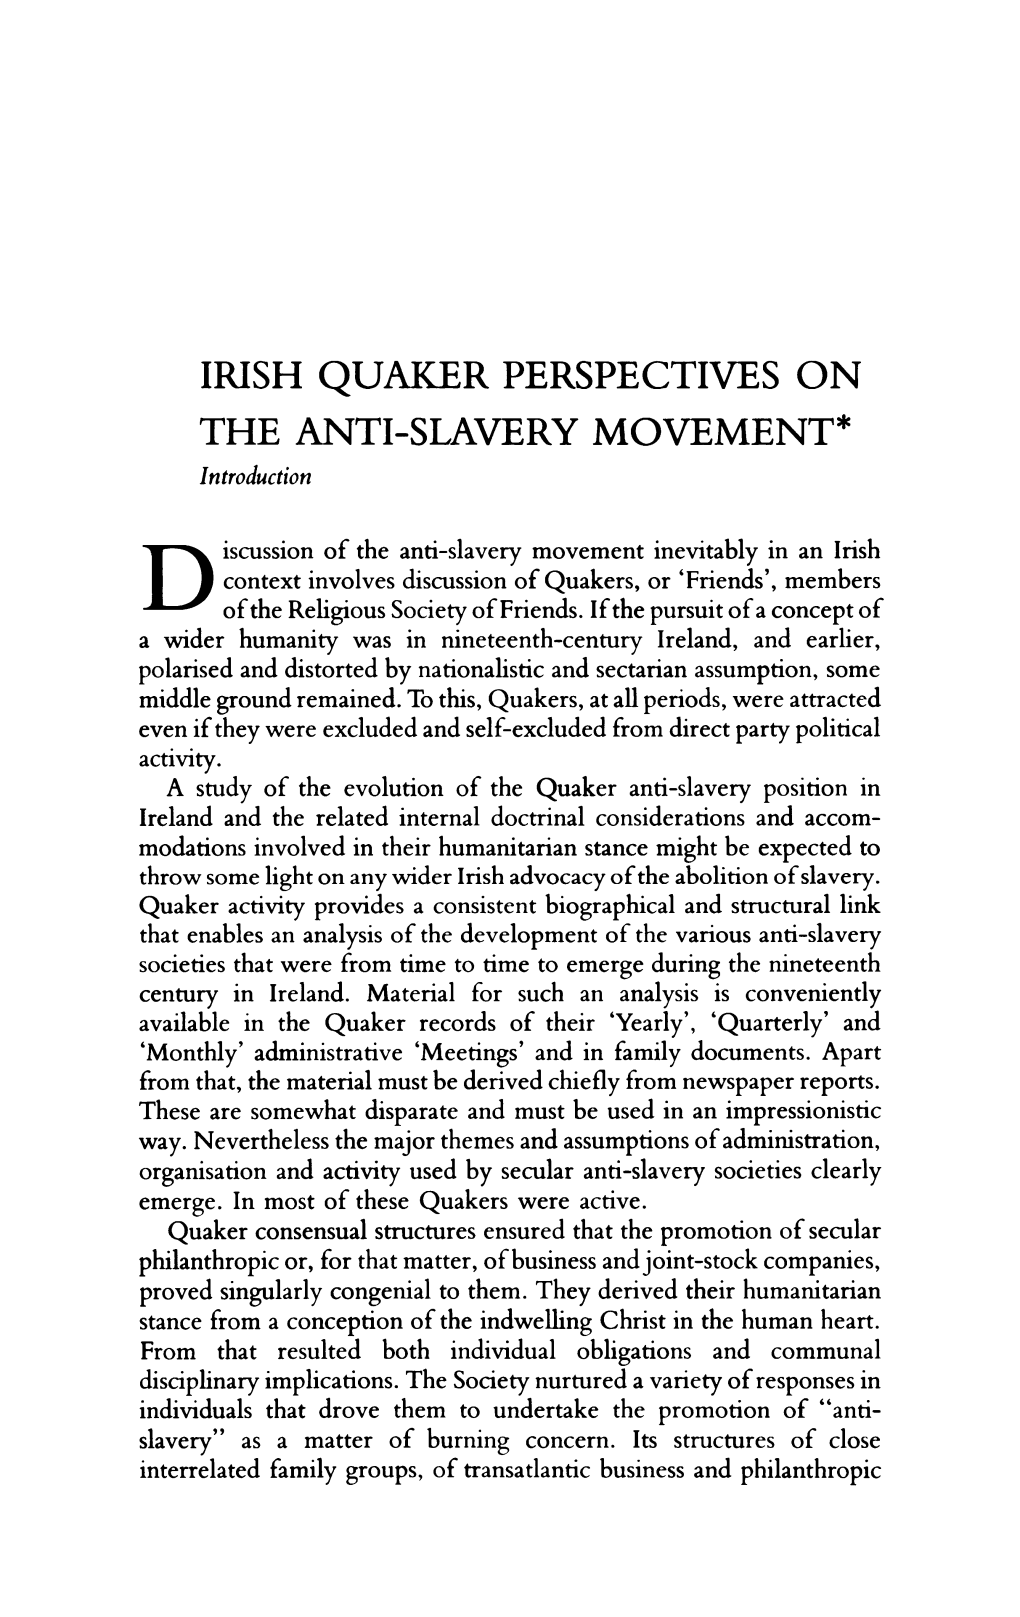 IRISH QUAKER PERSPECTIVES on the ANTI-SLAVERY MOVEMENT* Introduction